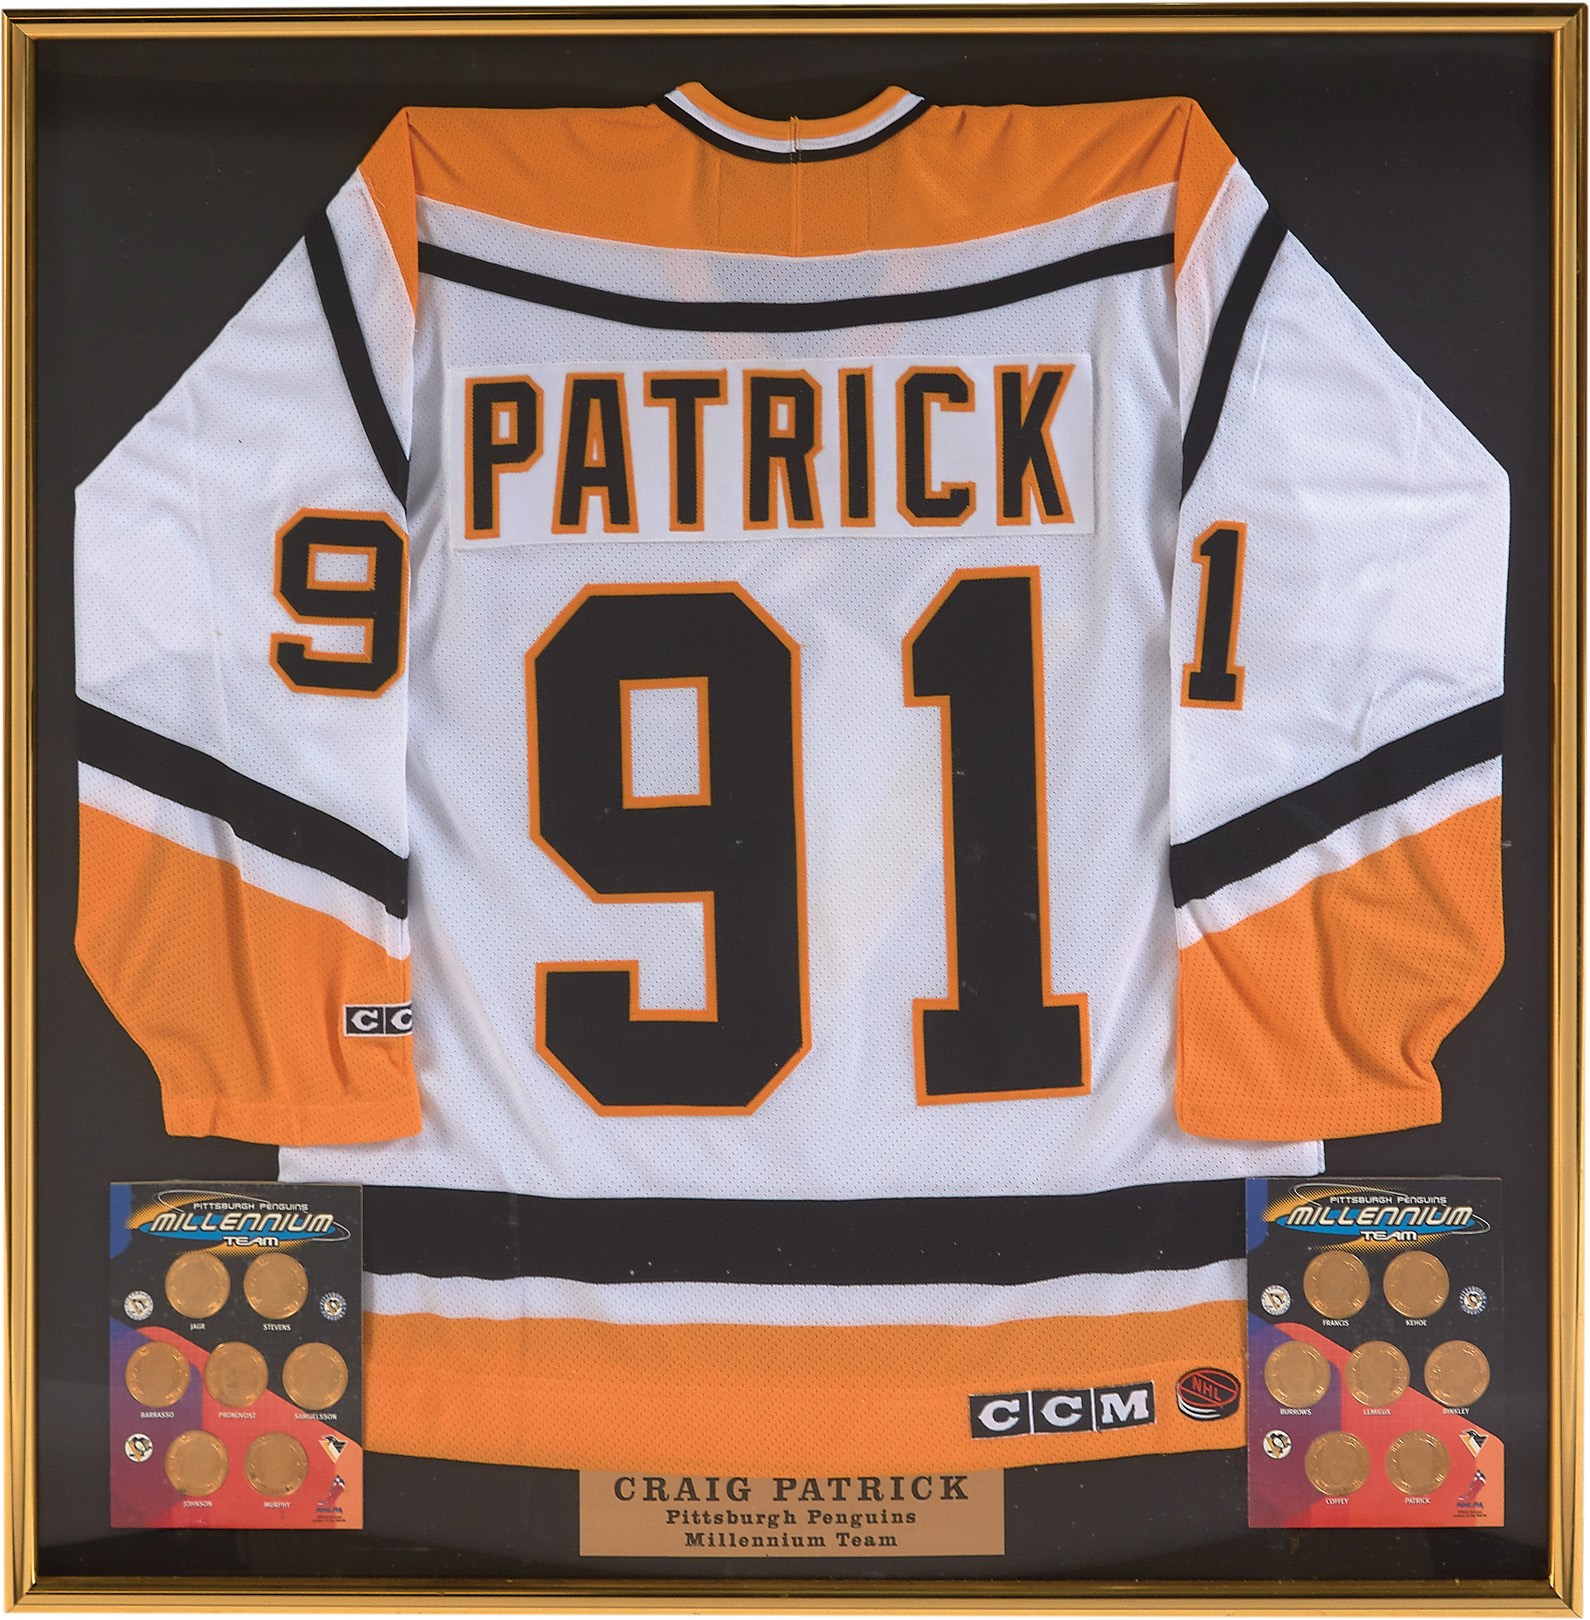 - Pittsburgh Penguins Millenium Team Framed Display Presented to Craig Patrick